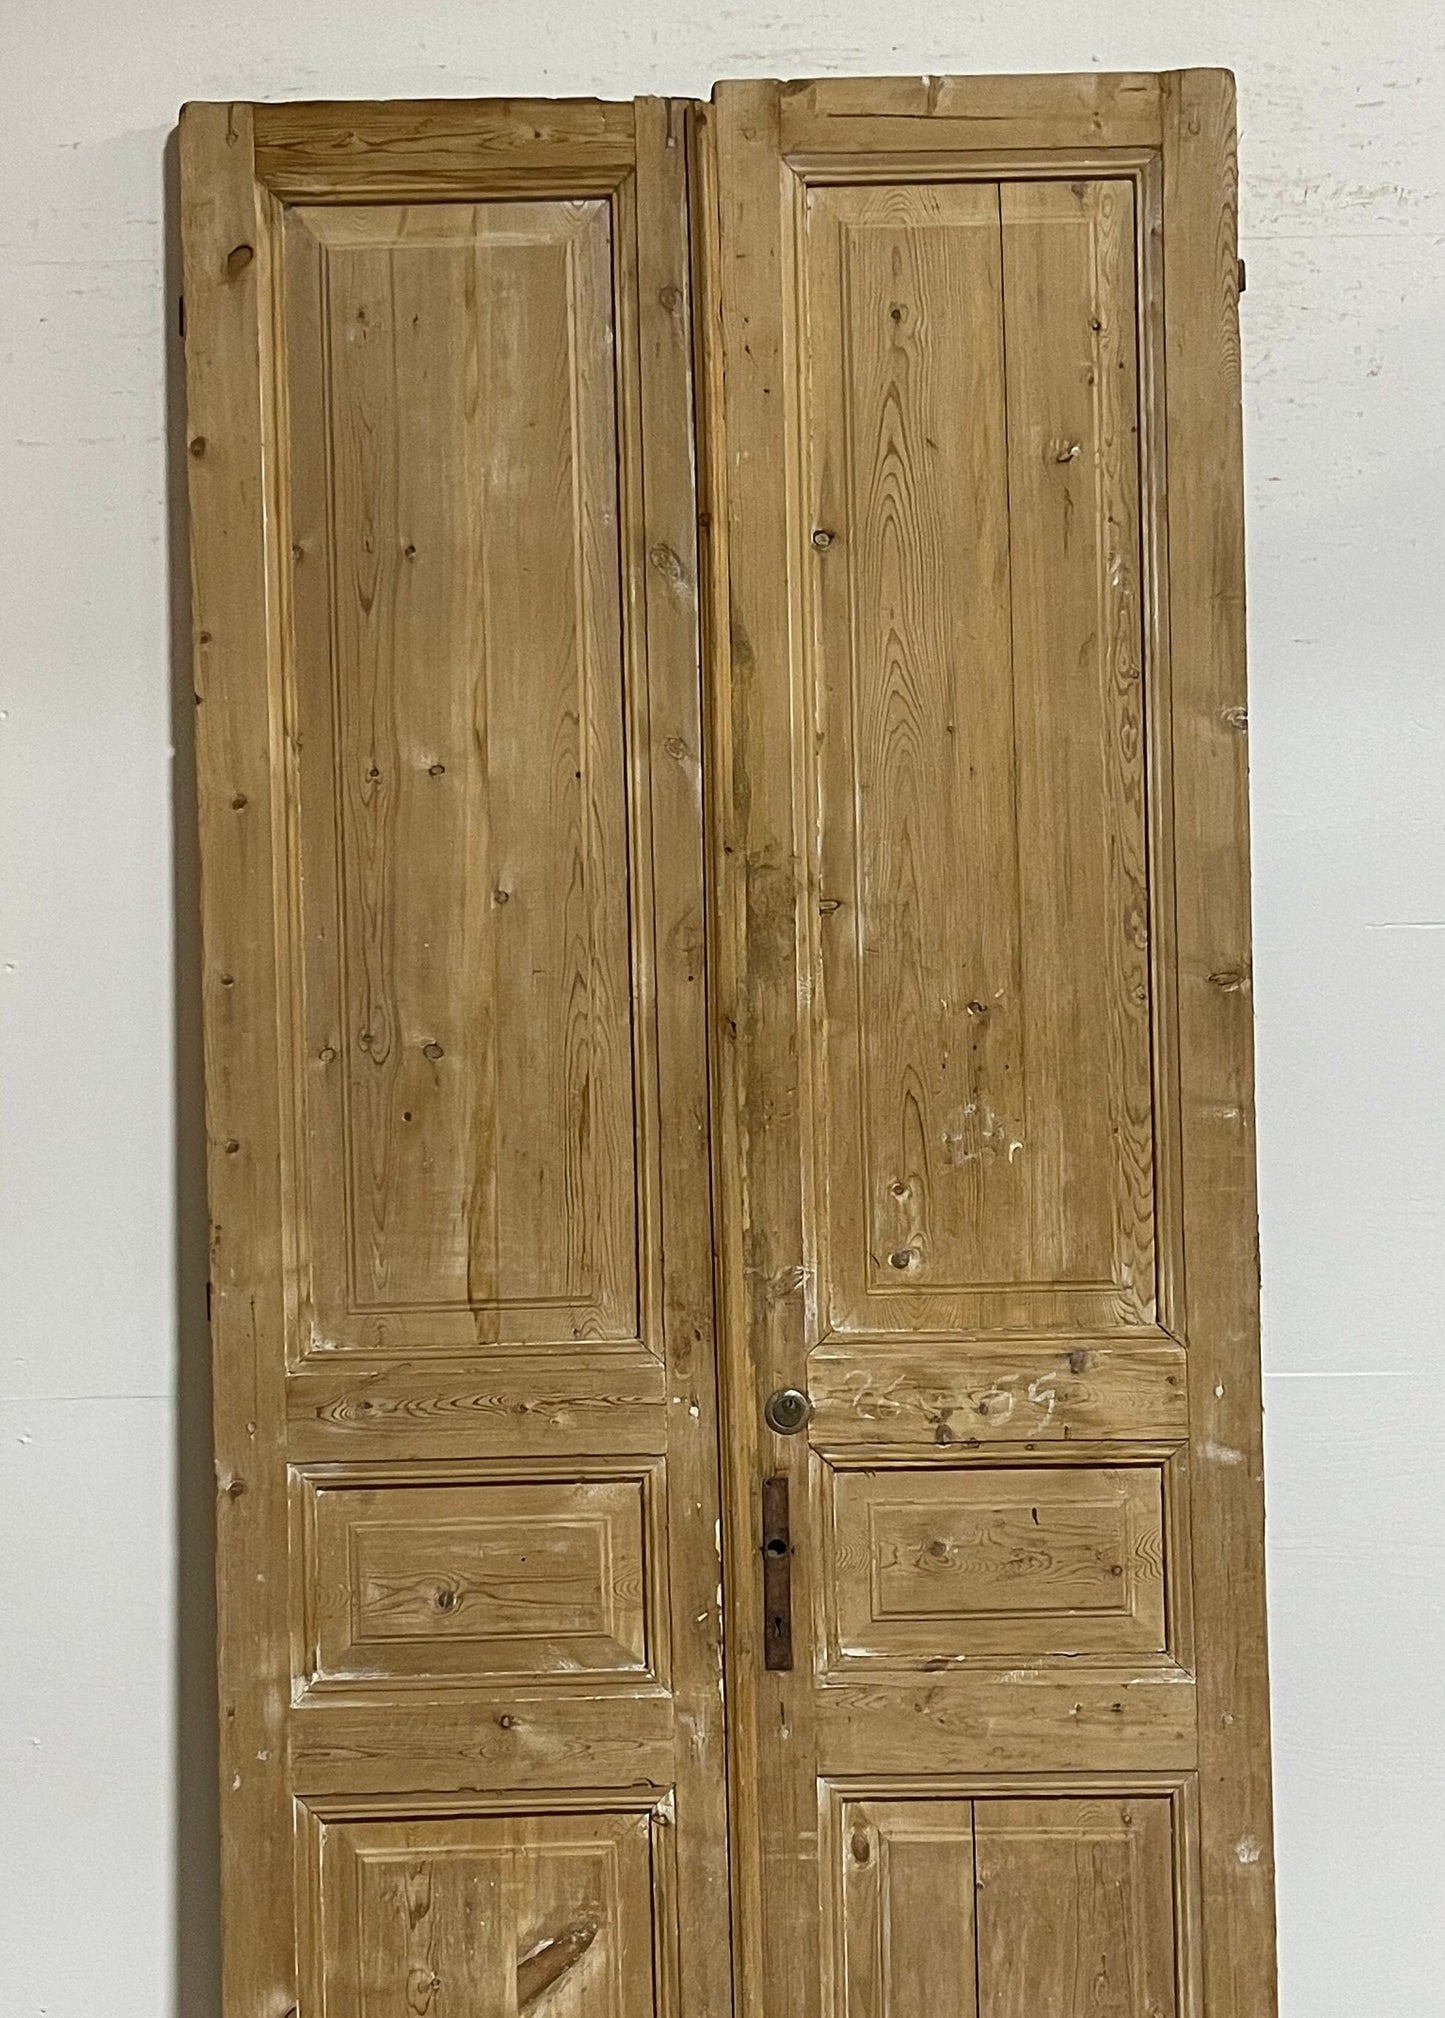 Antique French panel doors (102x43.5) G0176s